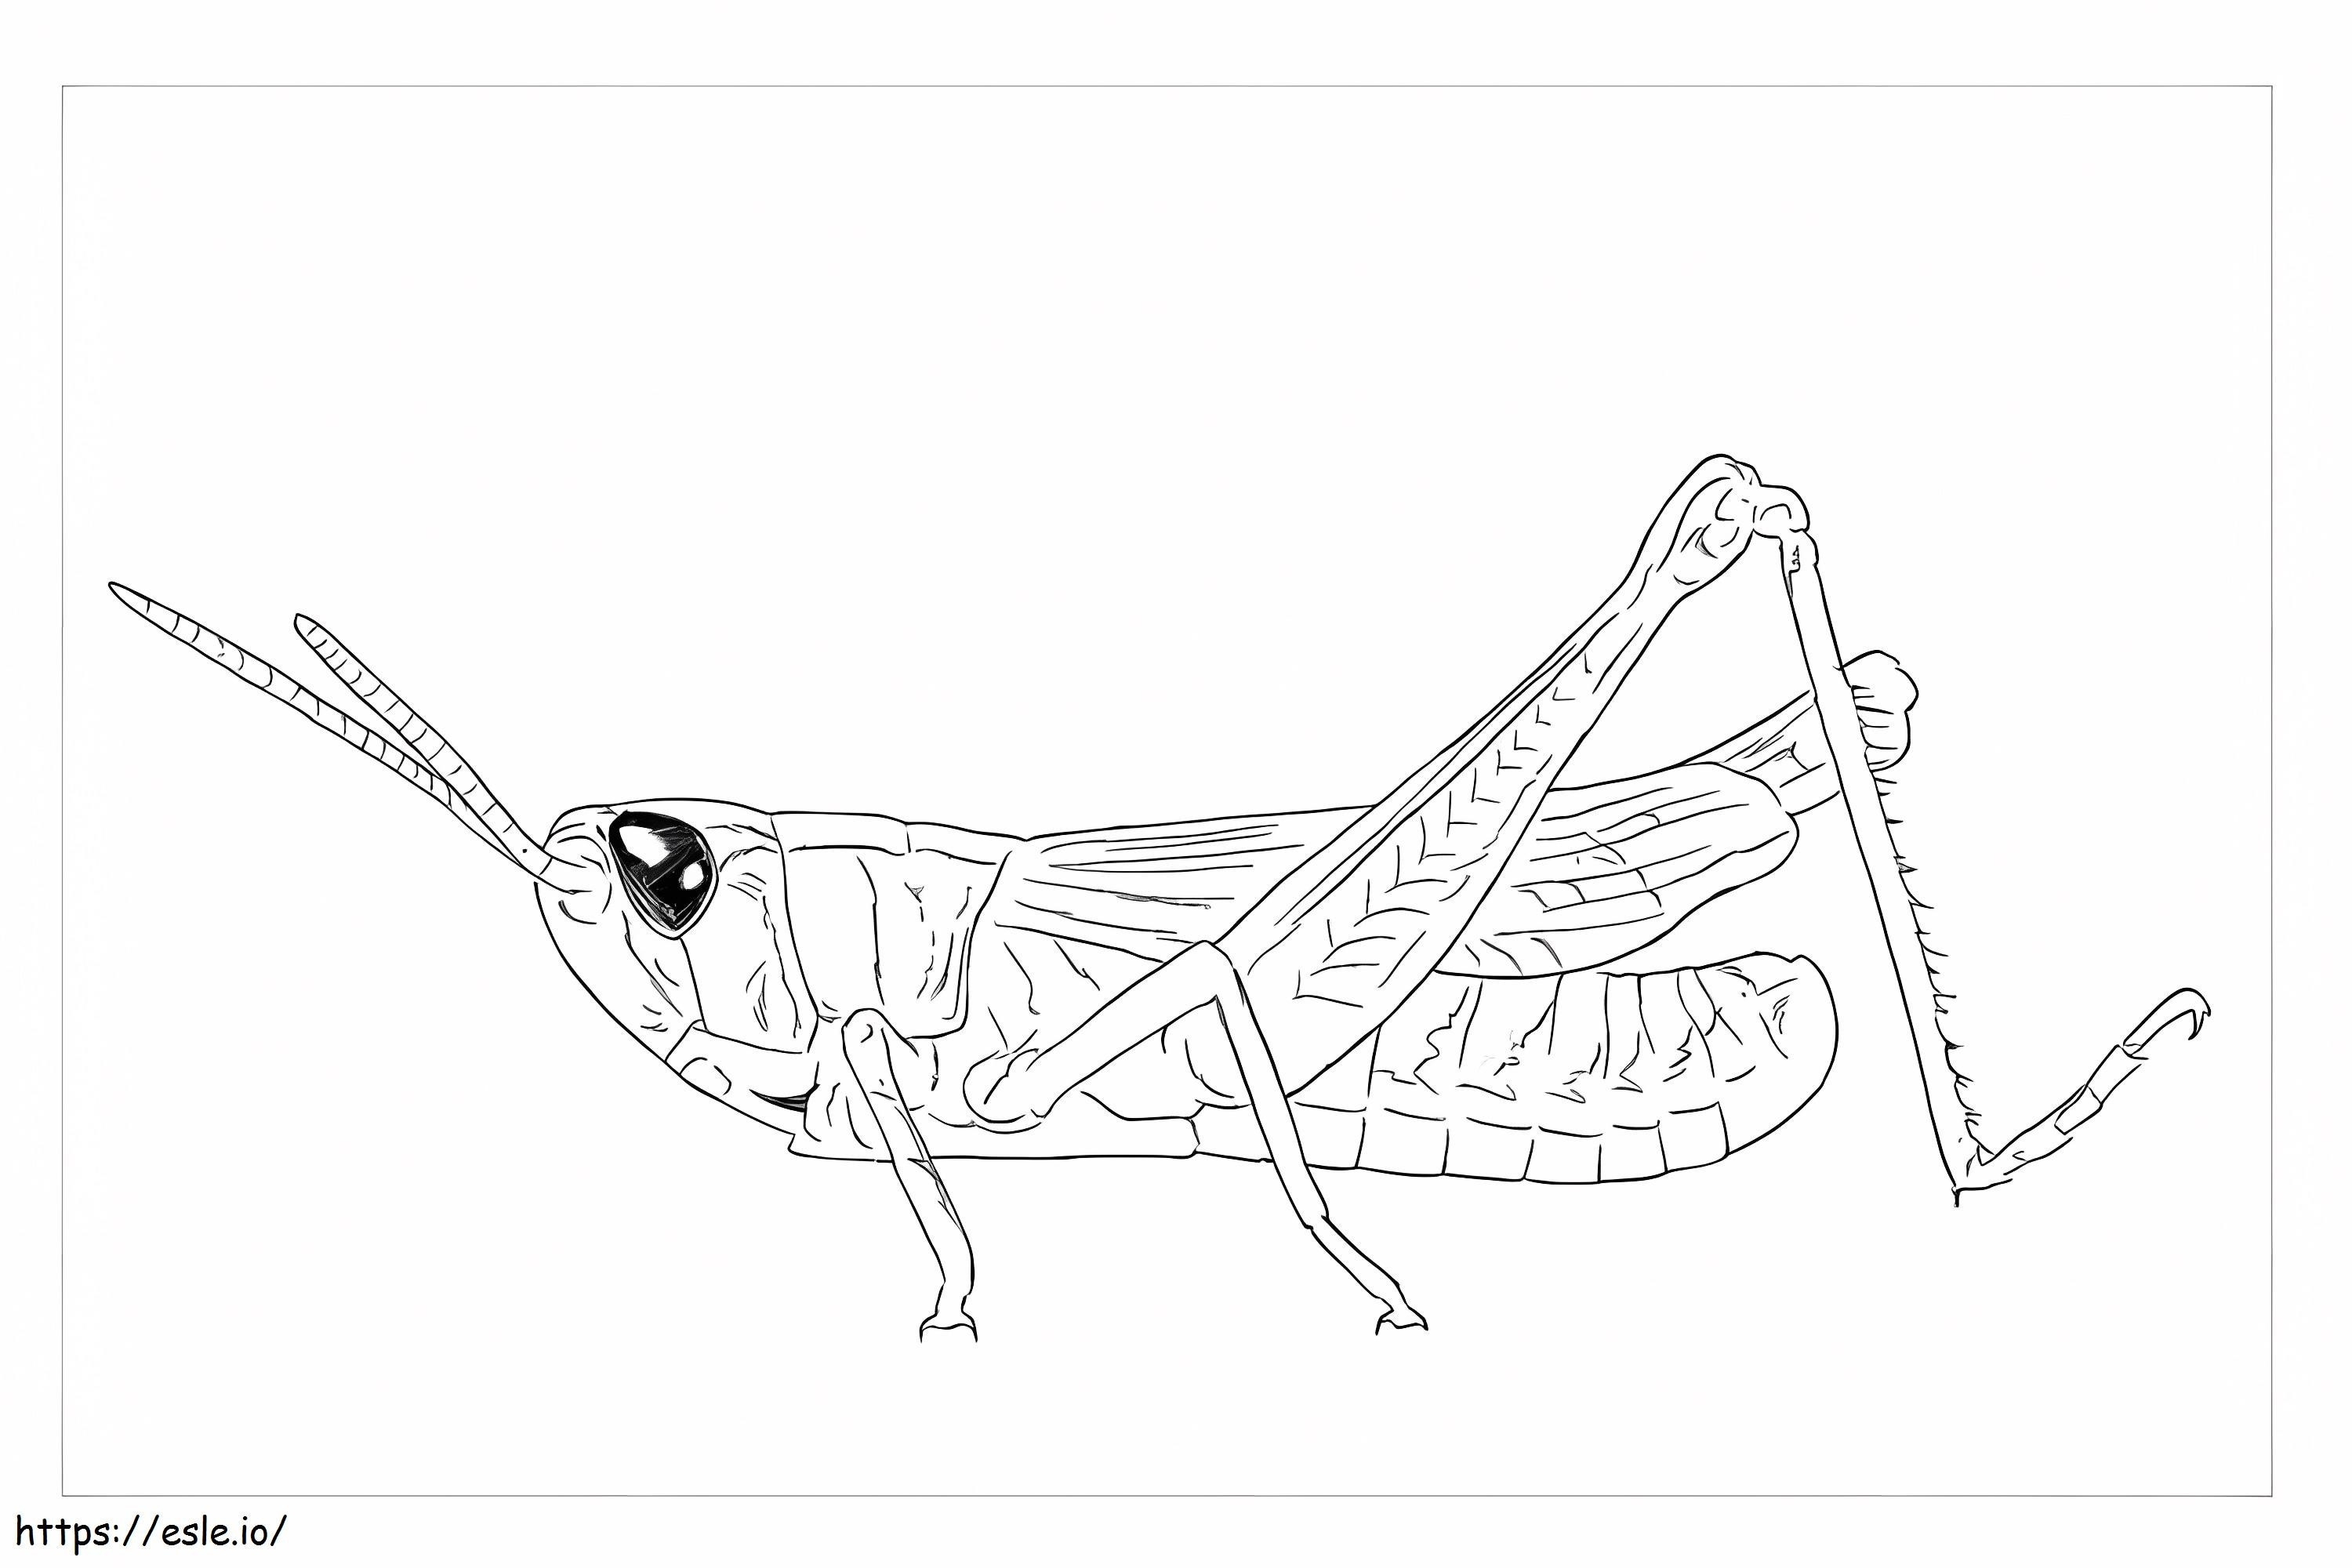 Prairie Grasshopper coloring page